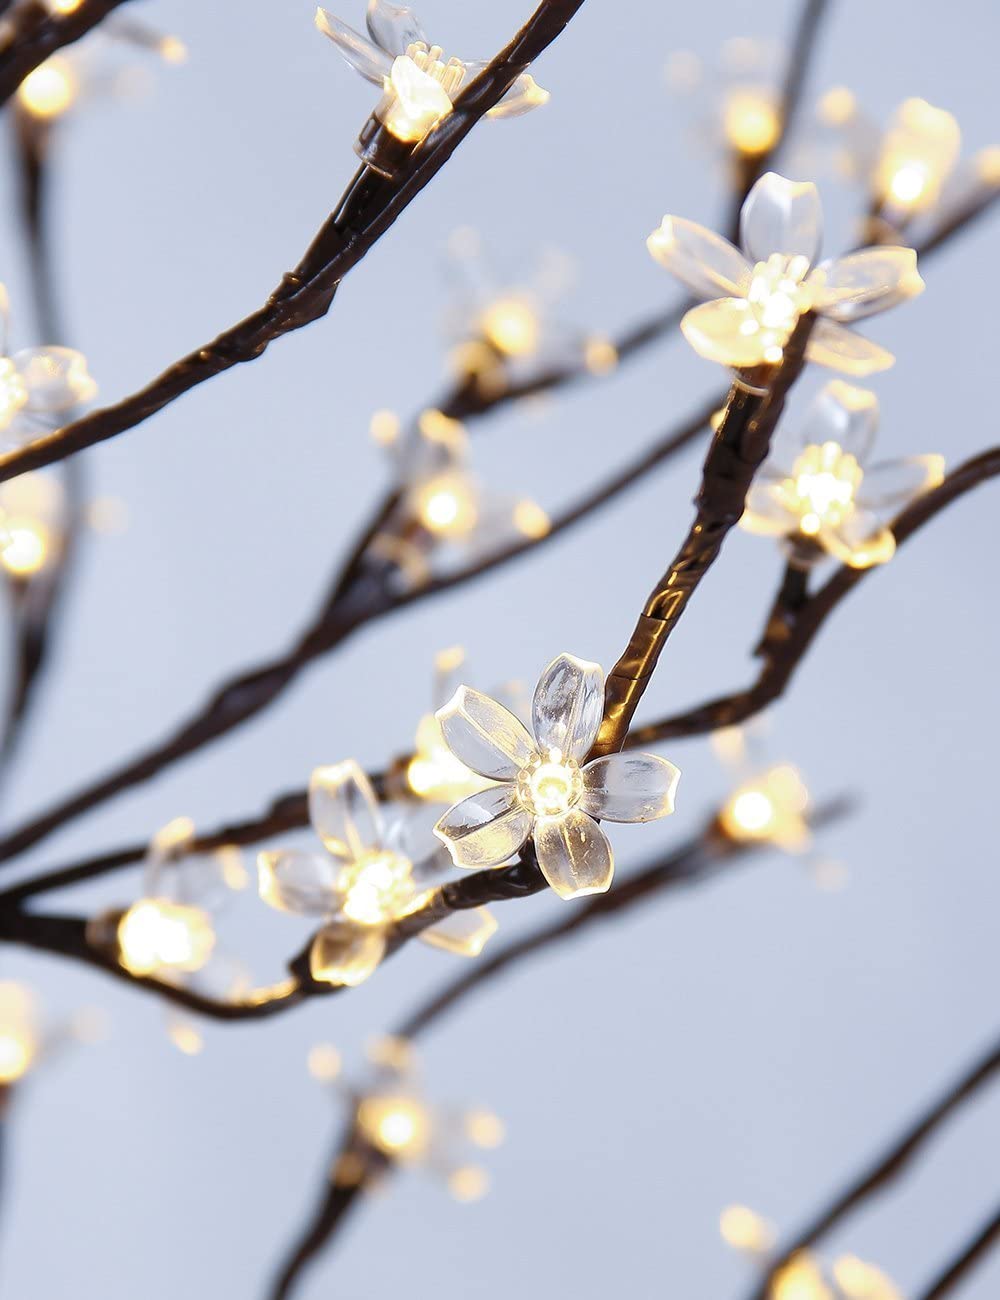 Rainleaf 6FT 208L LED Cherry Blossom Tree, Warm White